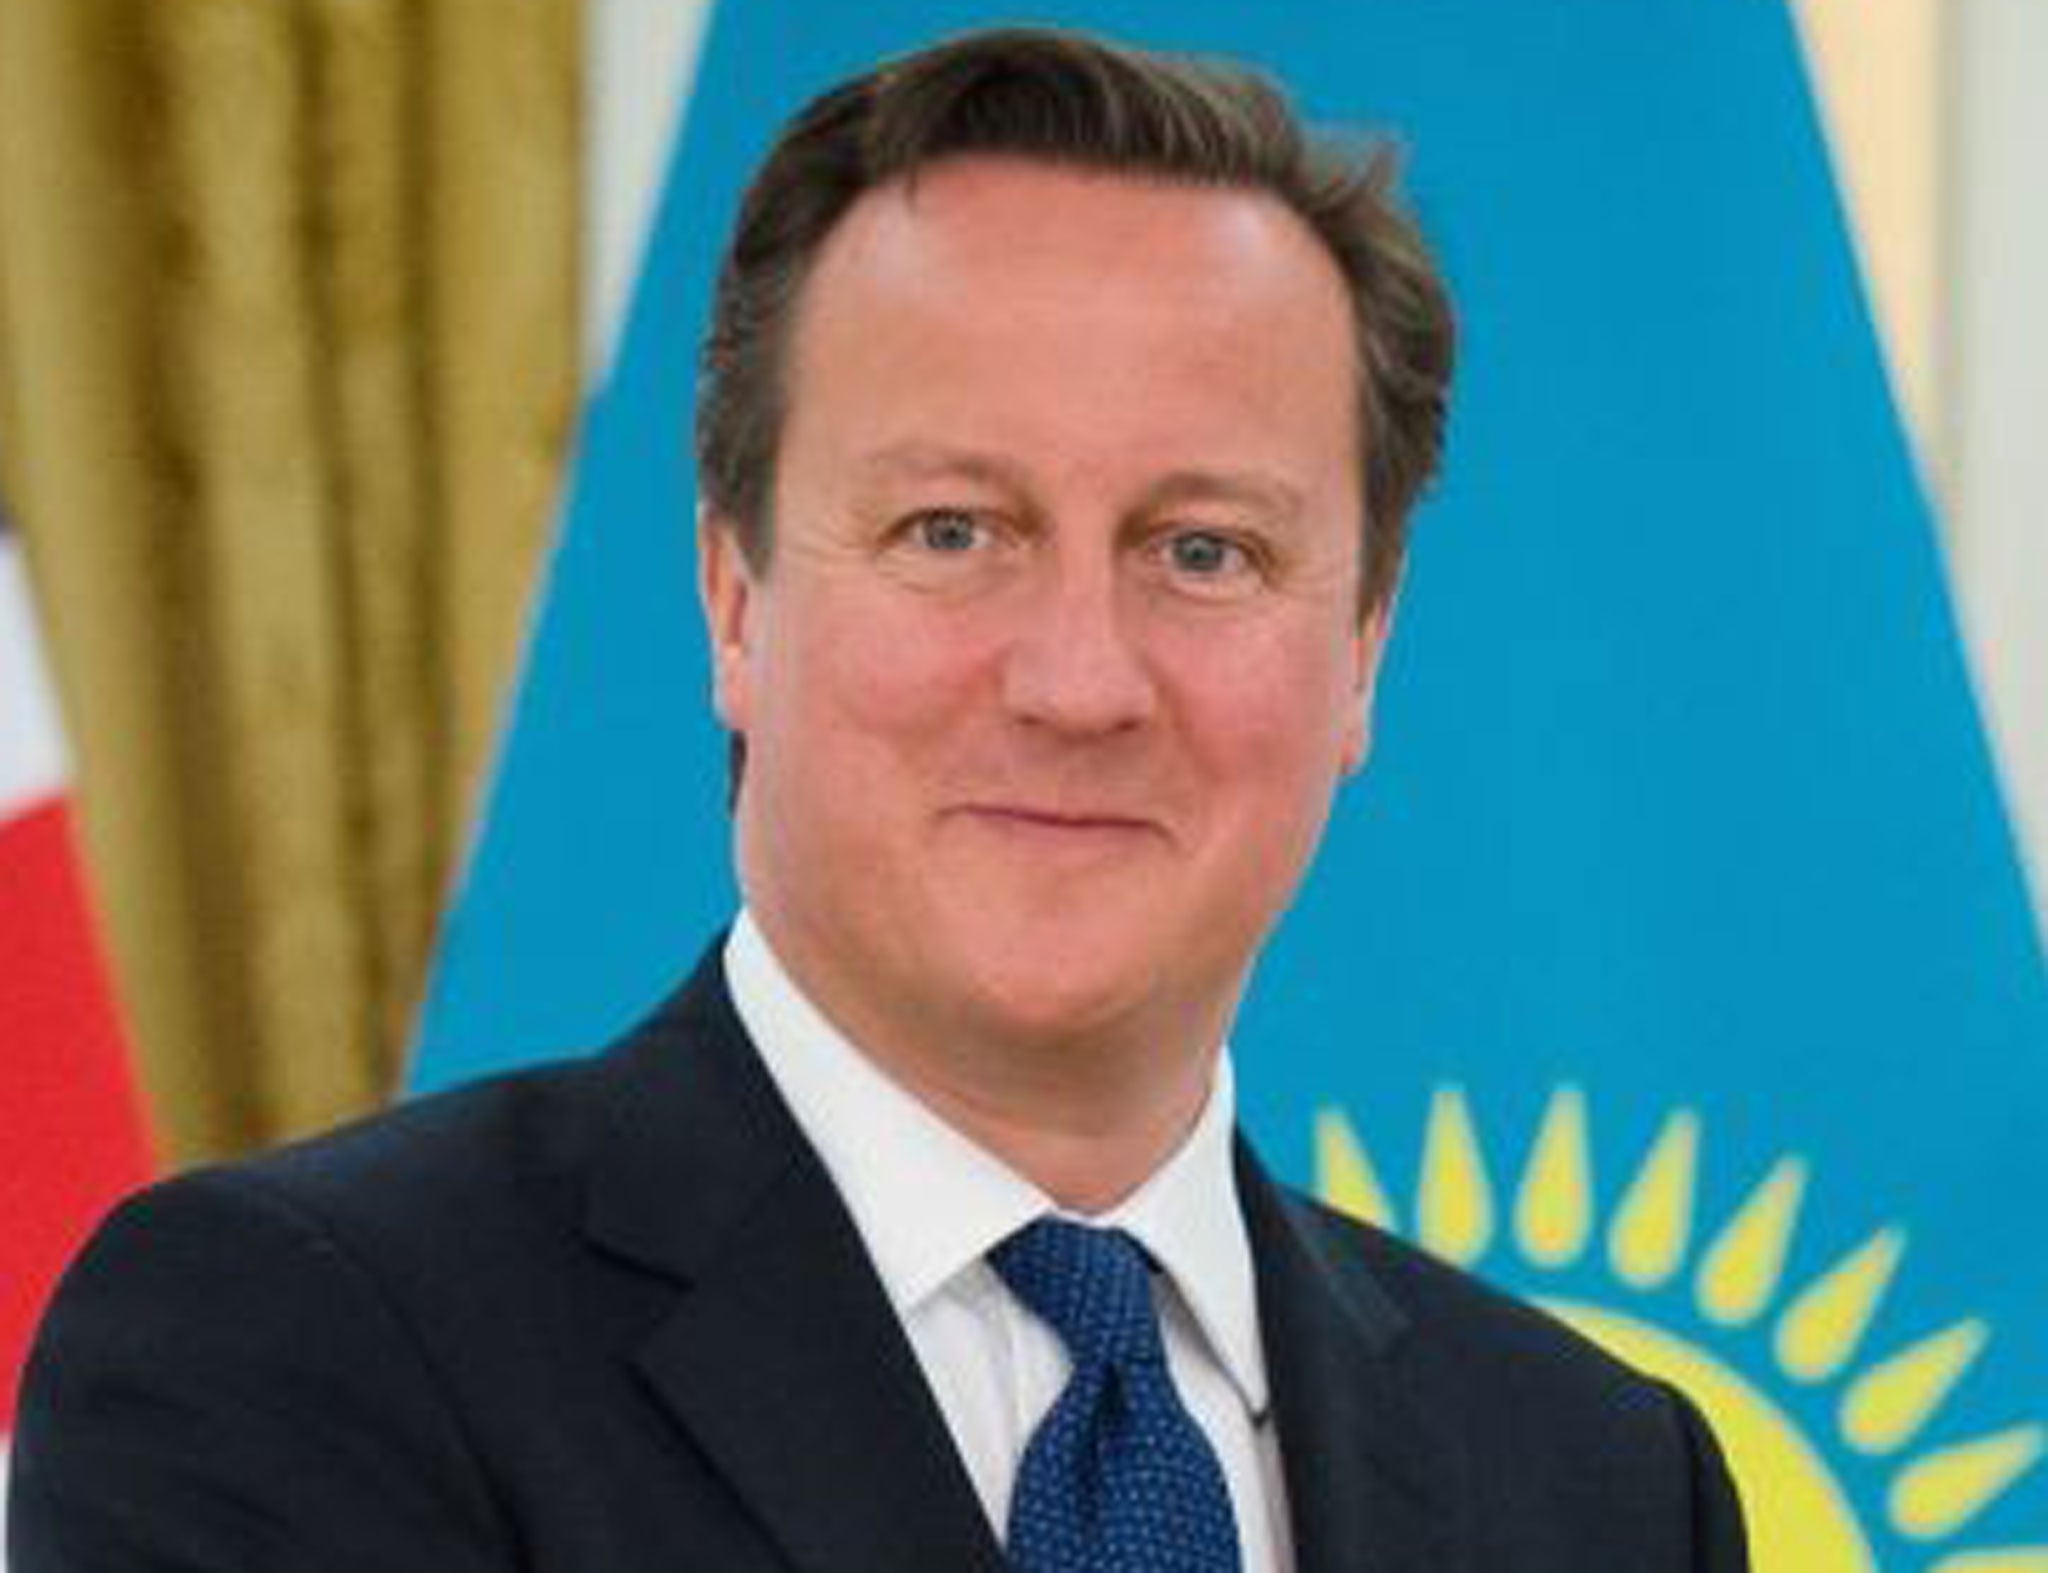 David Cameron said the case was “deeply regrettable”